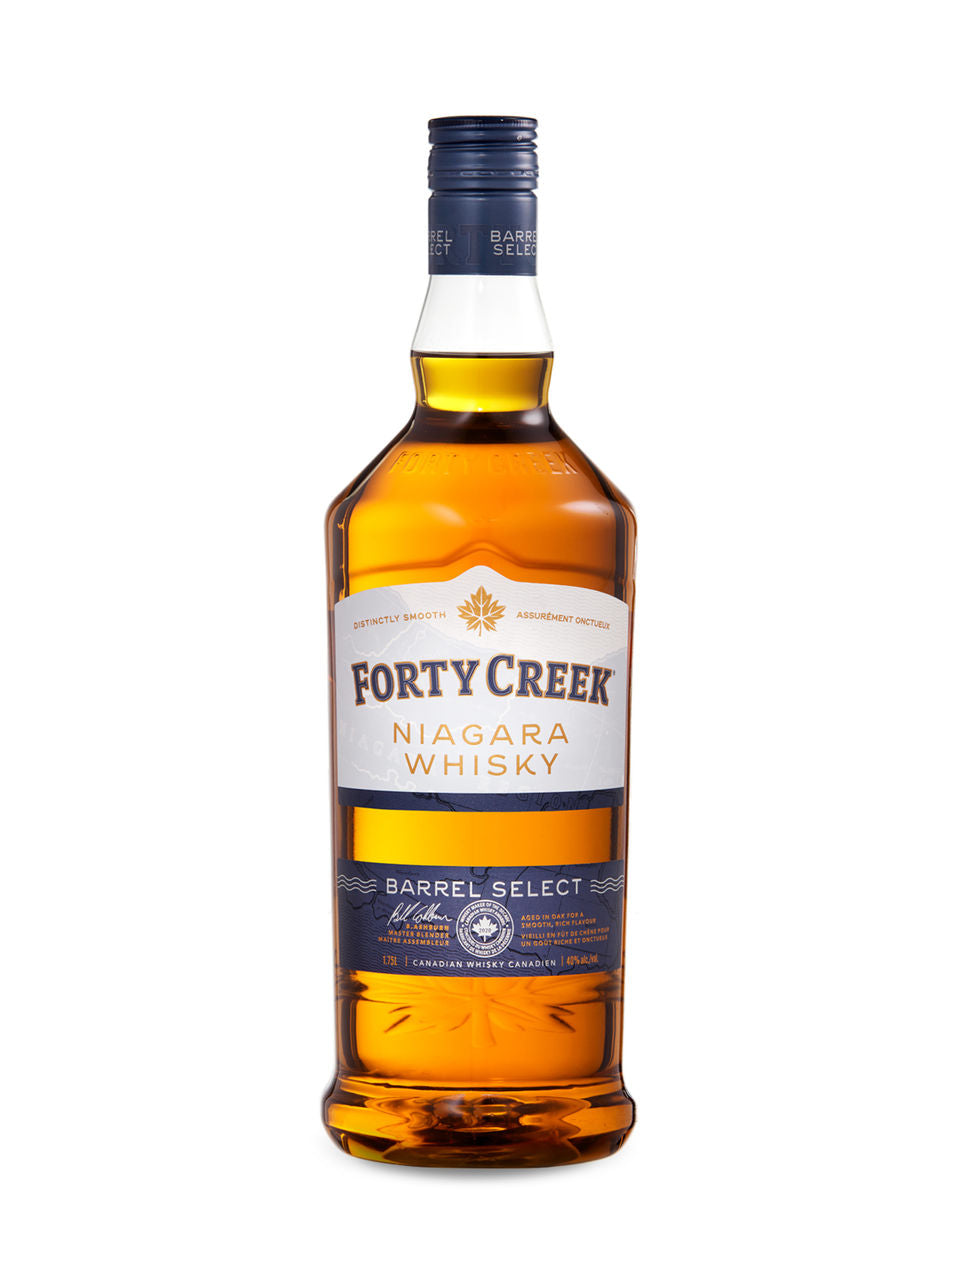 Forty Creek Barrel Select Whisky 1750 mL bottle